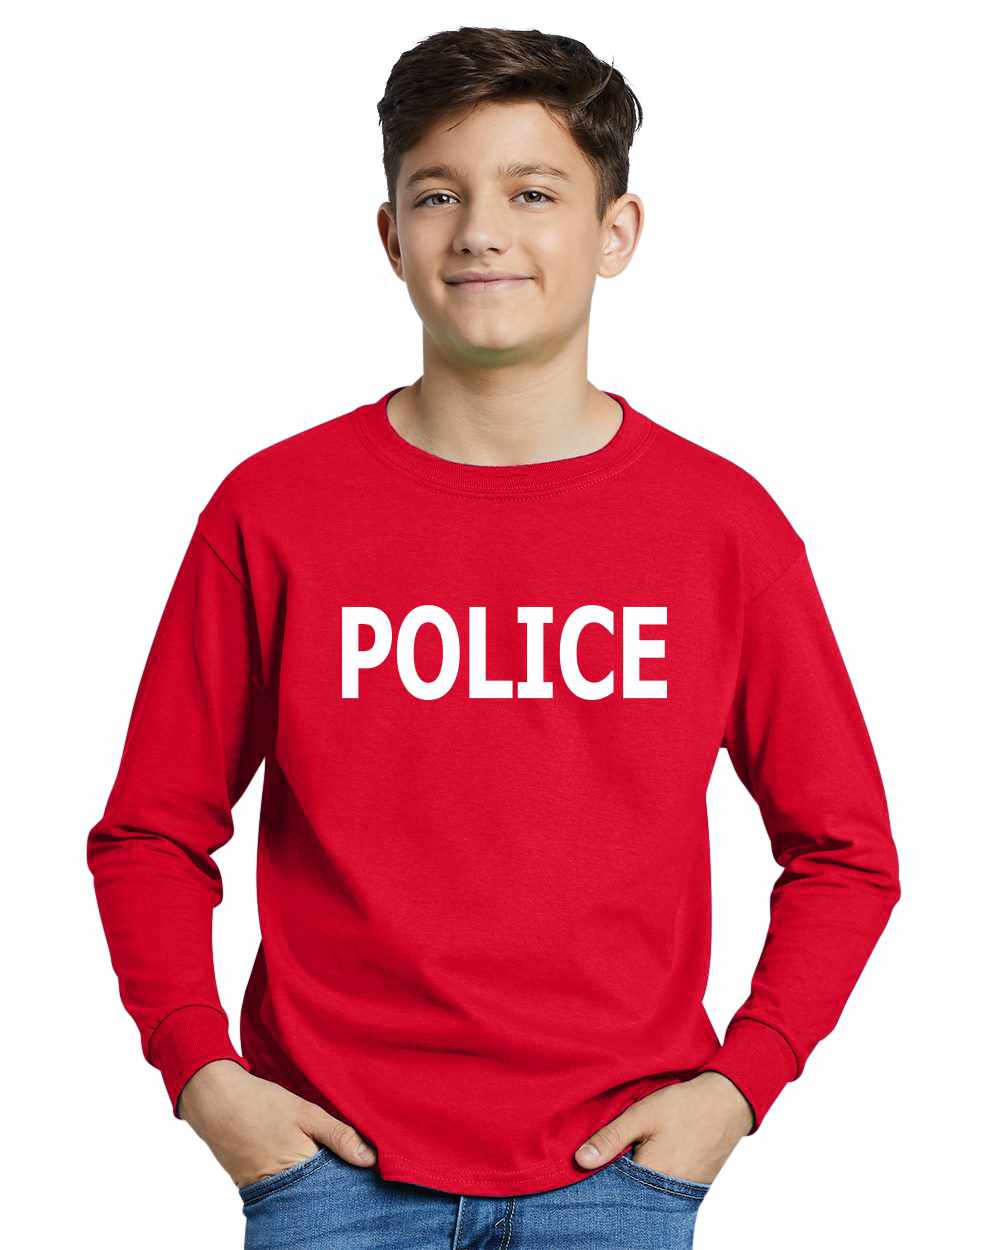 POLICE on Youth Long Sleeve Shirt (#17-203)